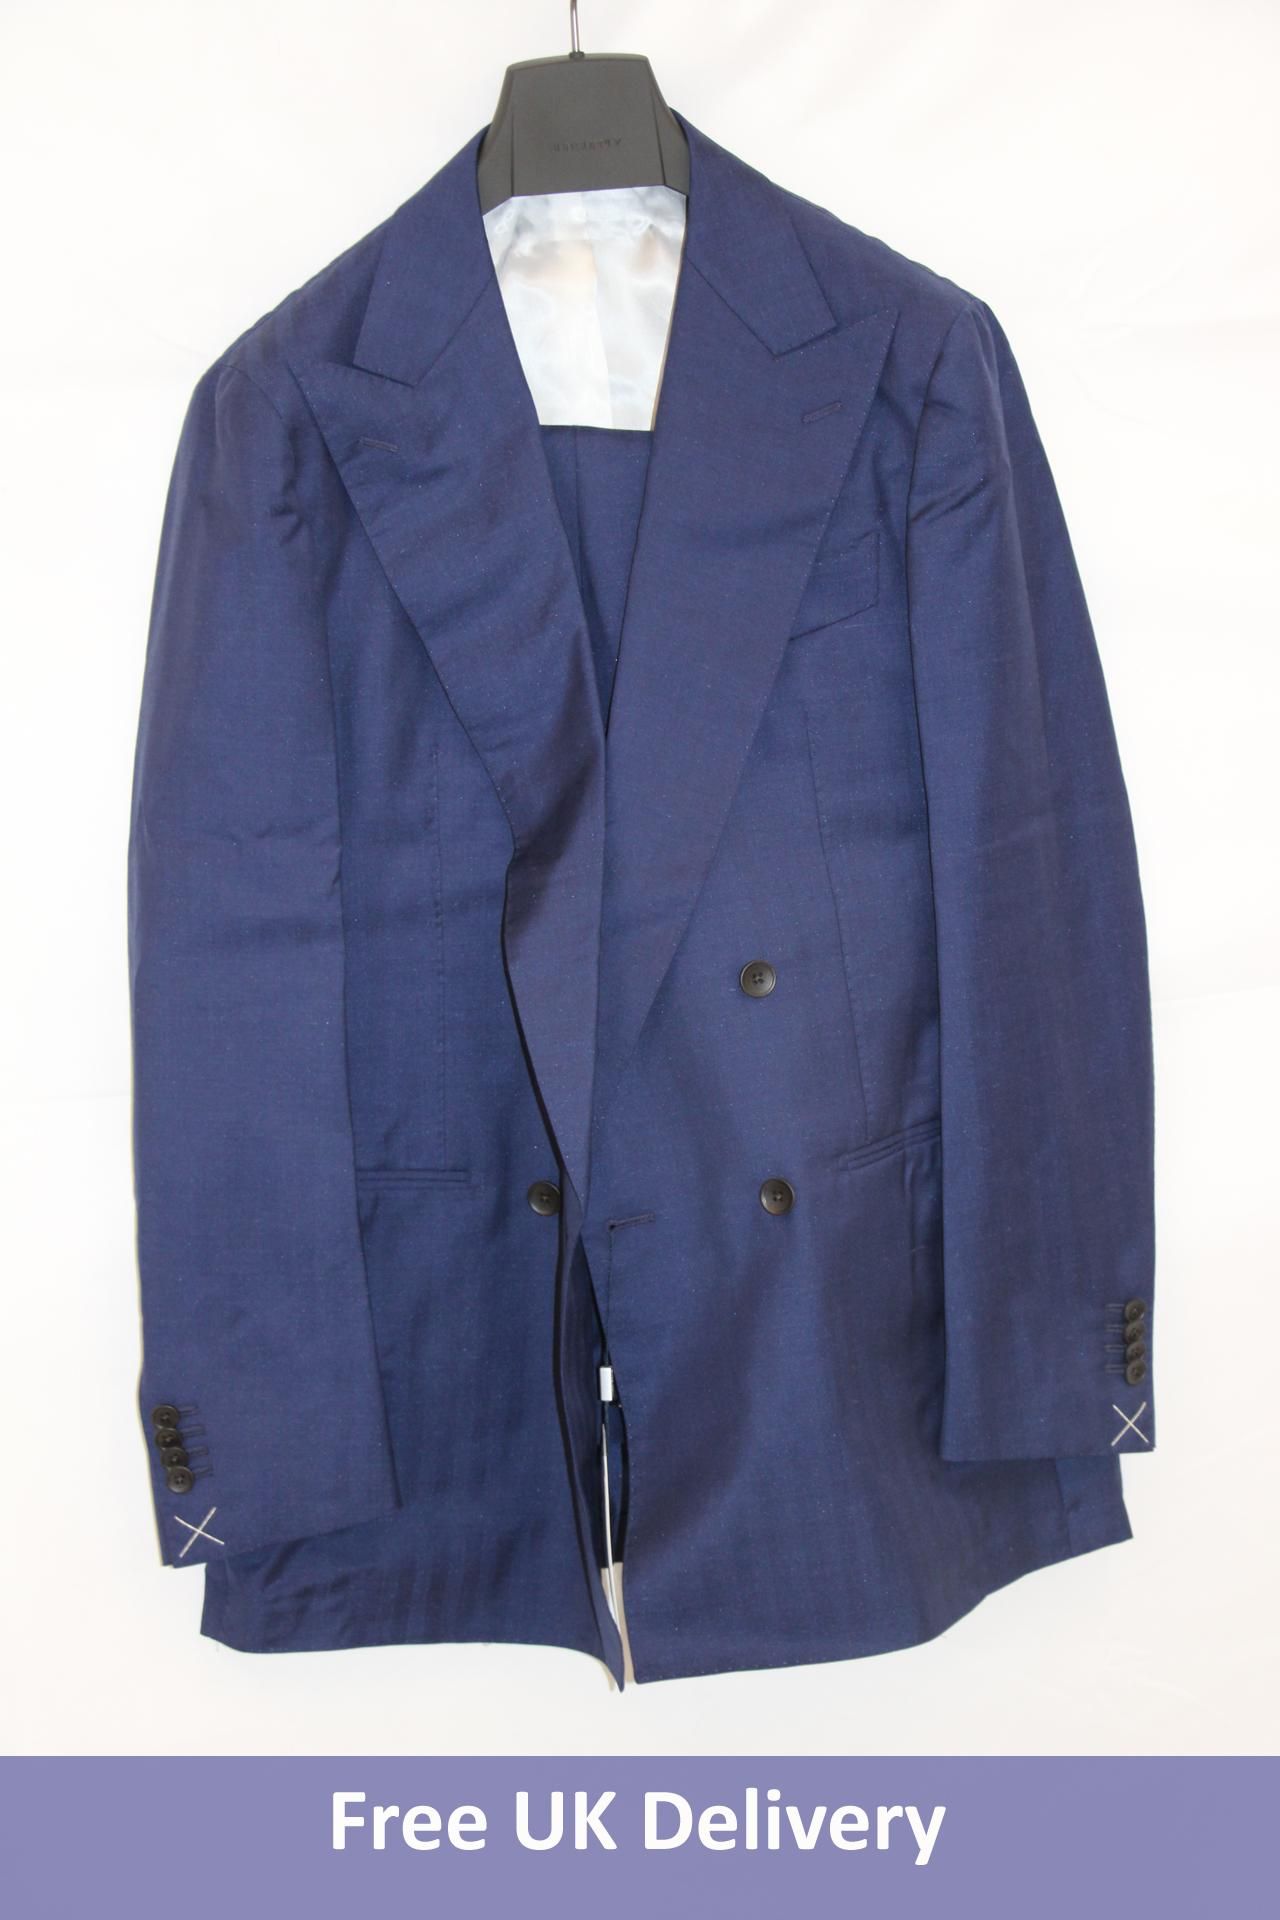 Suitsupply Herringbone Perennial Tail Suit, Mid Blue, Jacket UK38/Trousers 48. Box damaged